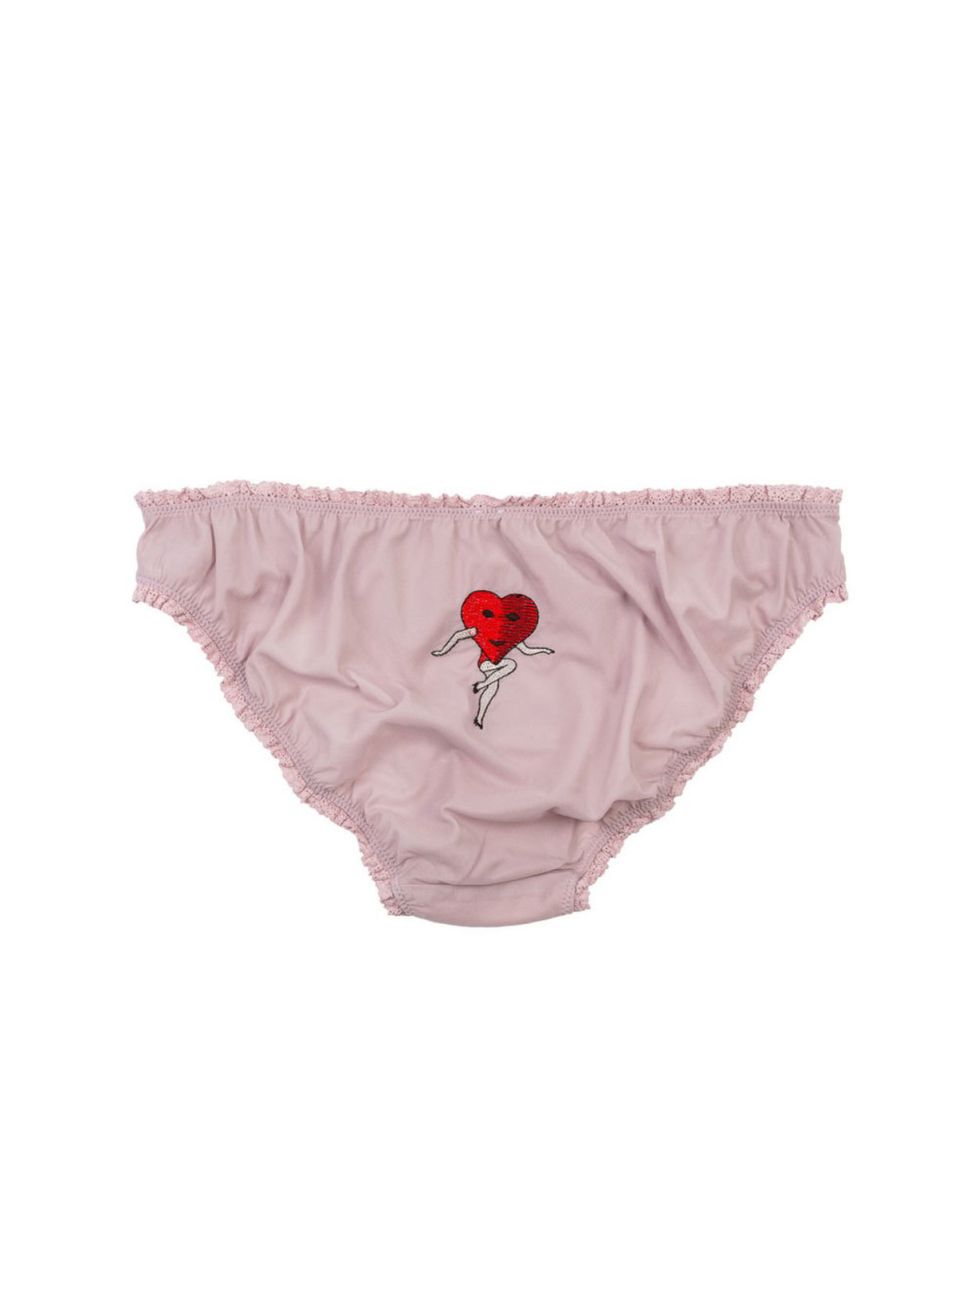 Pink, Carmine, Maroon, Undergarment, Active shorts, Coquelicot, Briefs, Underpants, Trunks, 